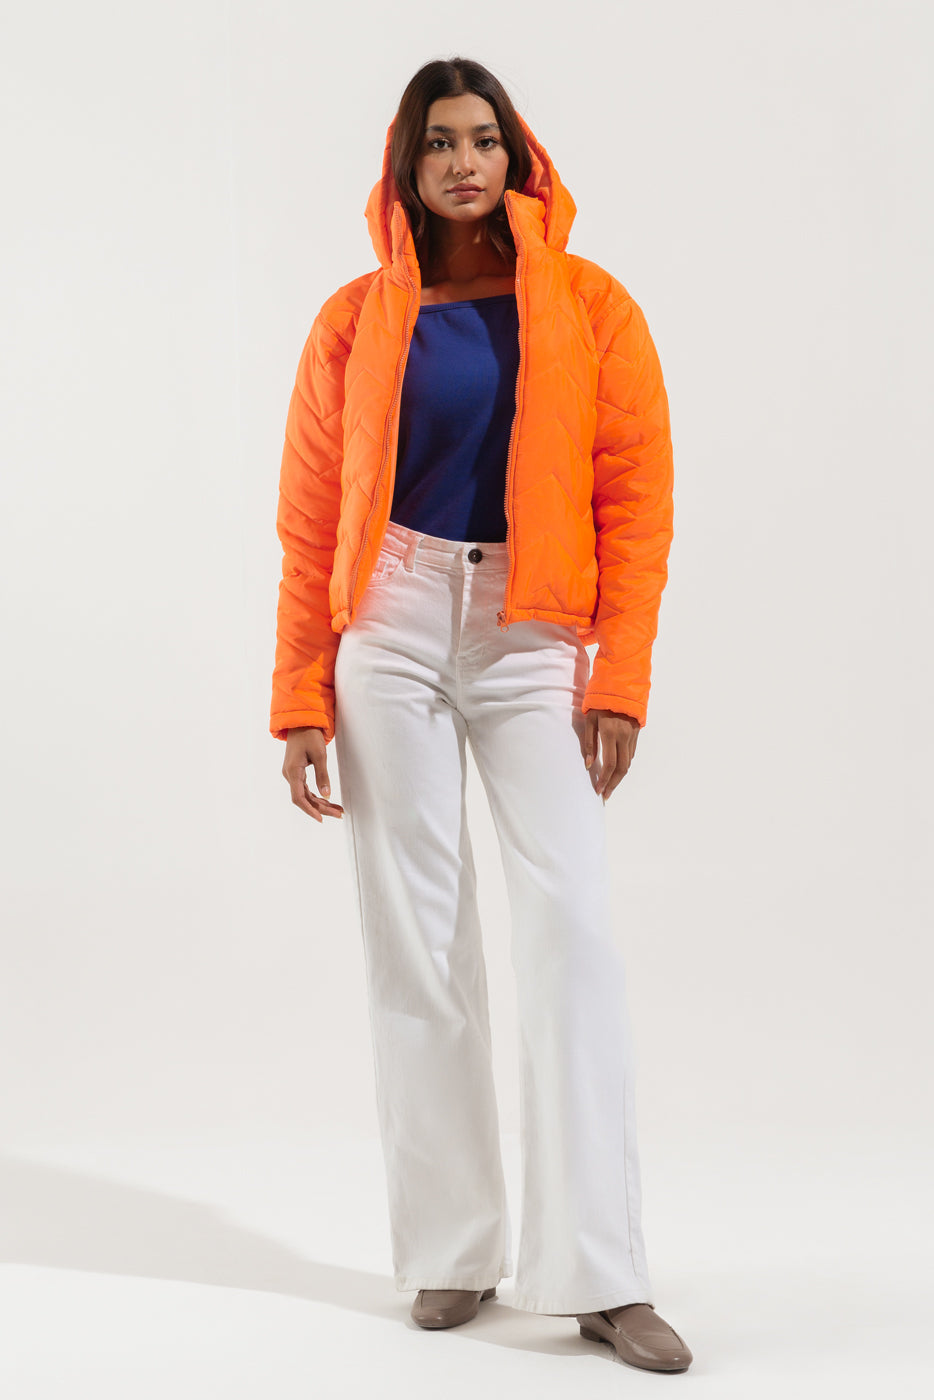 Vibrant Orange Jacket - BEECHTREE